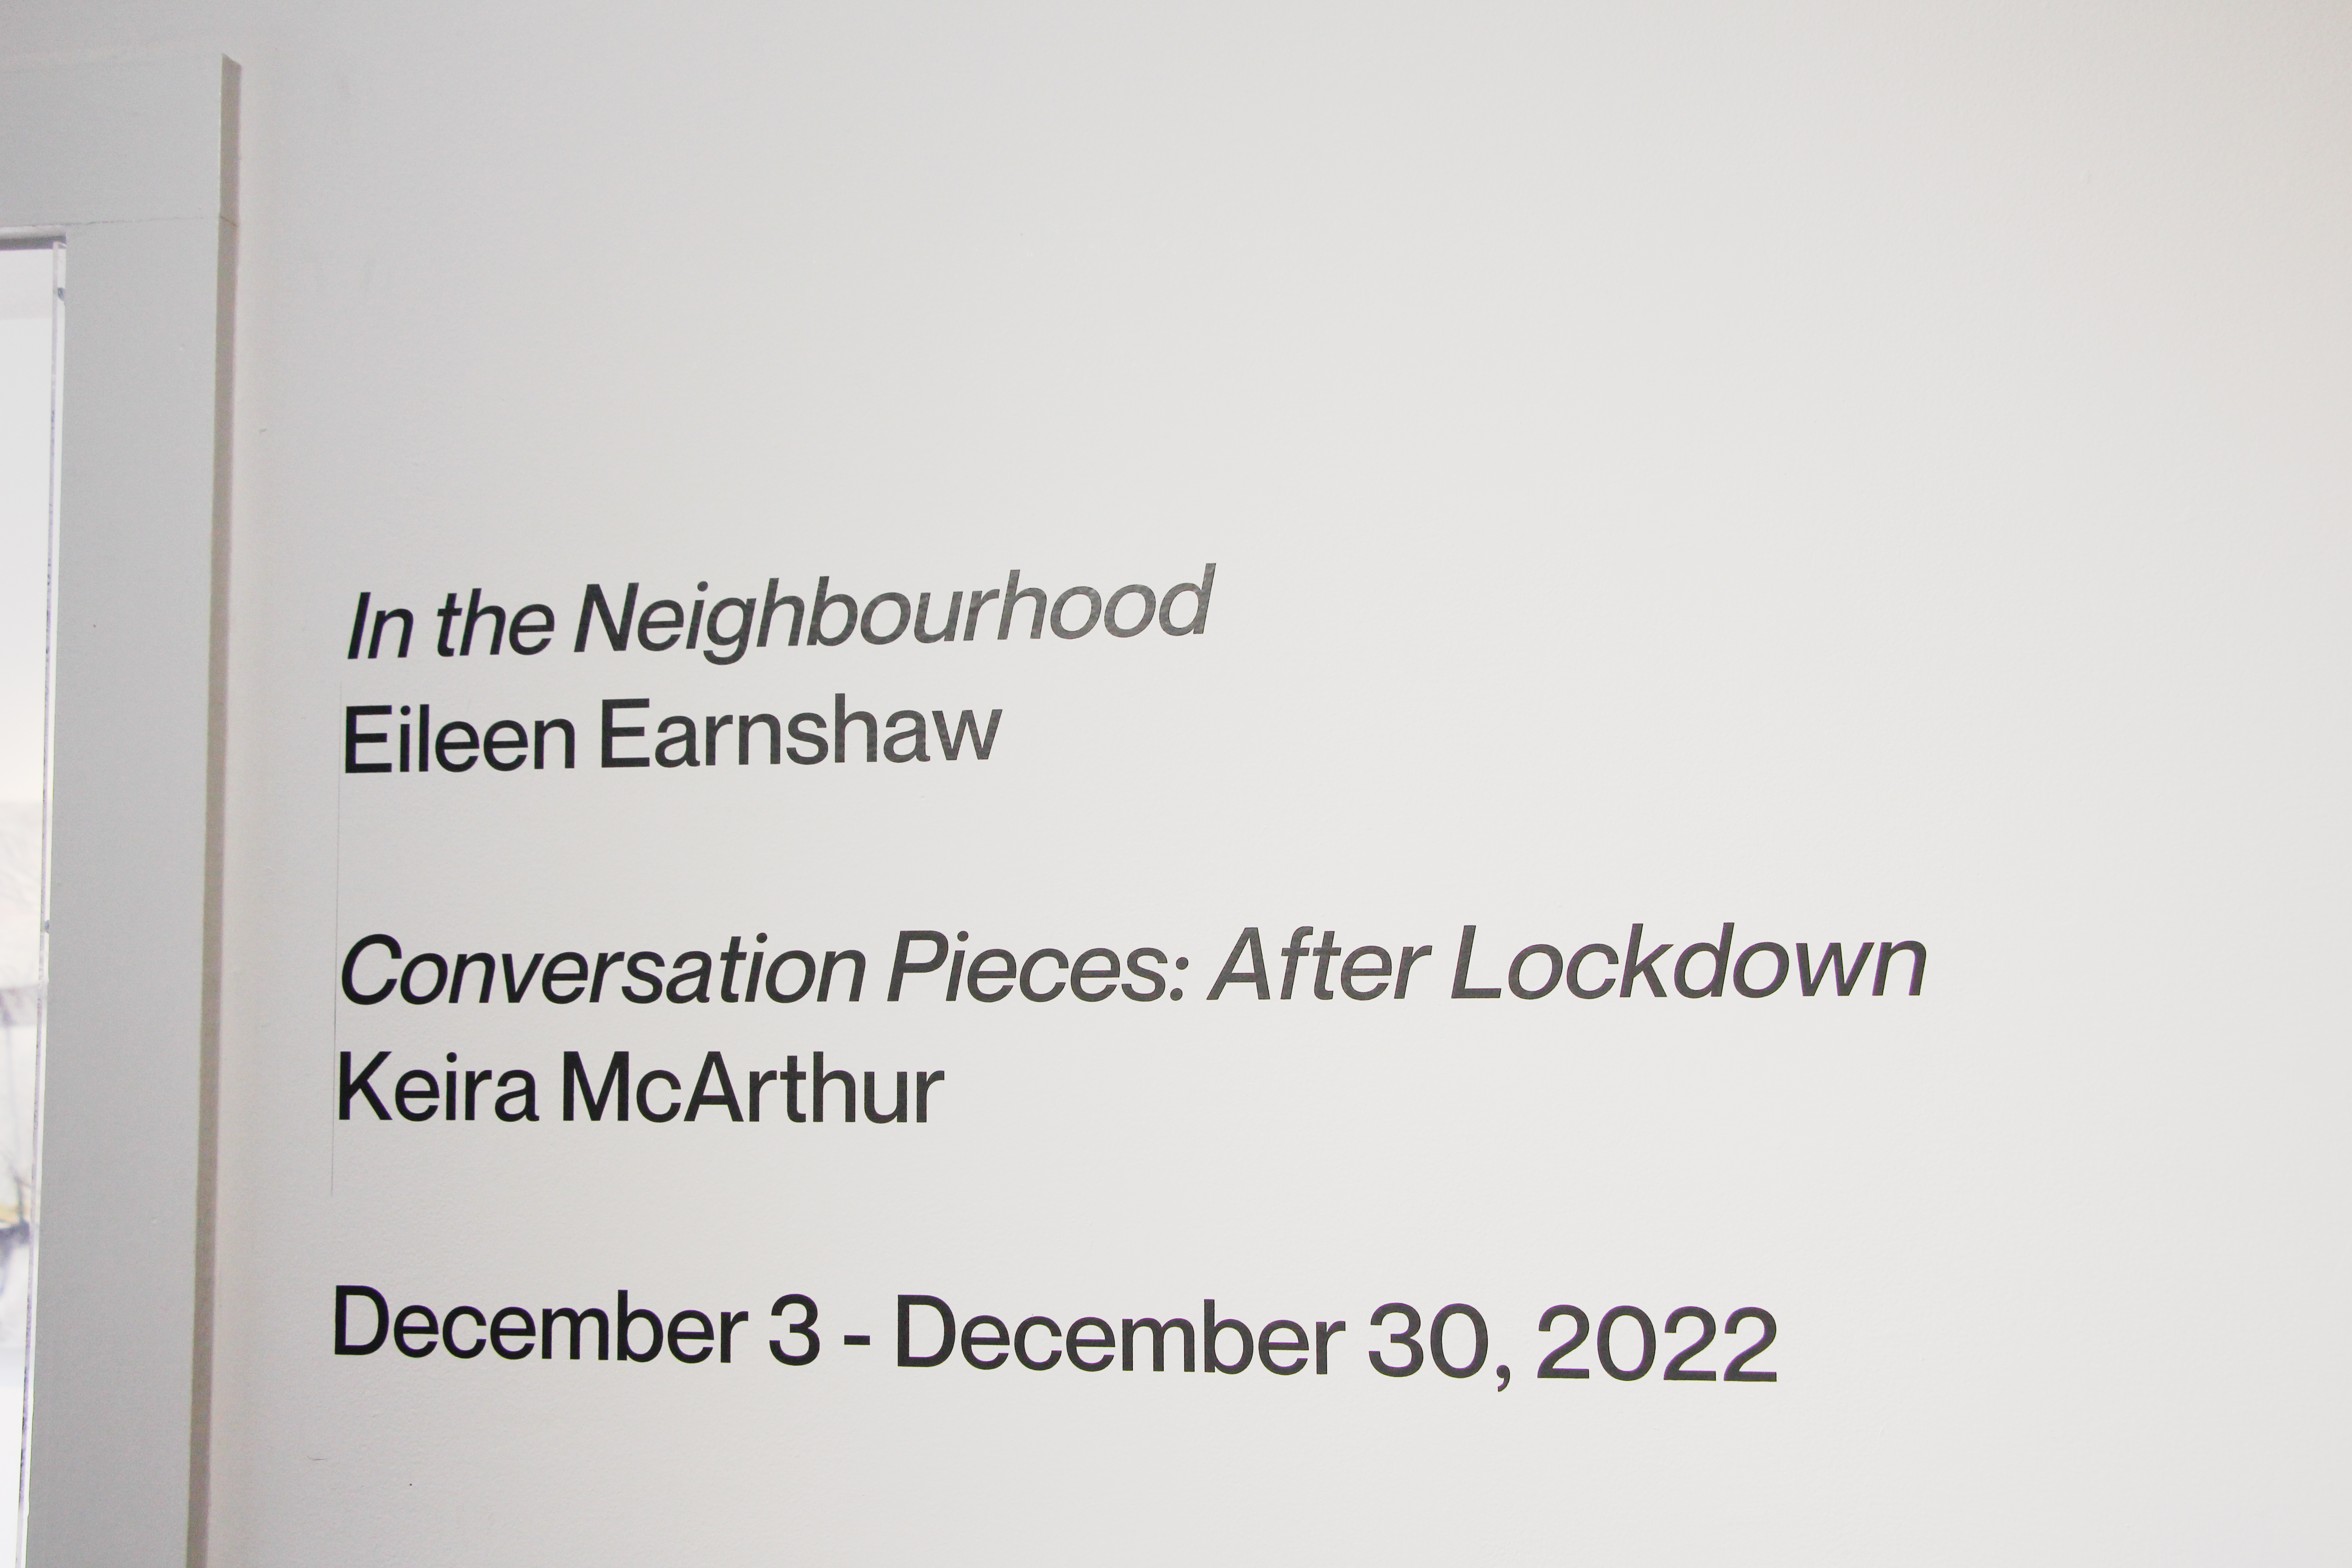 In the Neighbourhood: Eileen Earnshaw & Keira McArthur: After Lockdown @ Members' Gallery Dec 3 to Dec 30, 2022